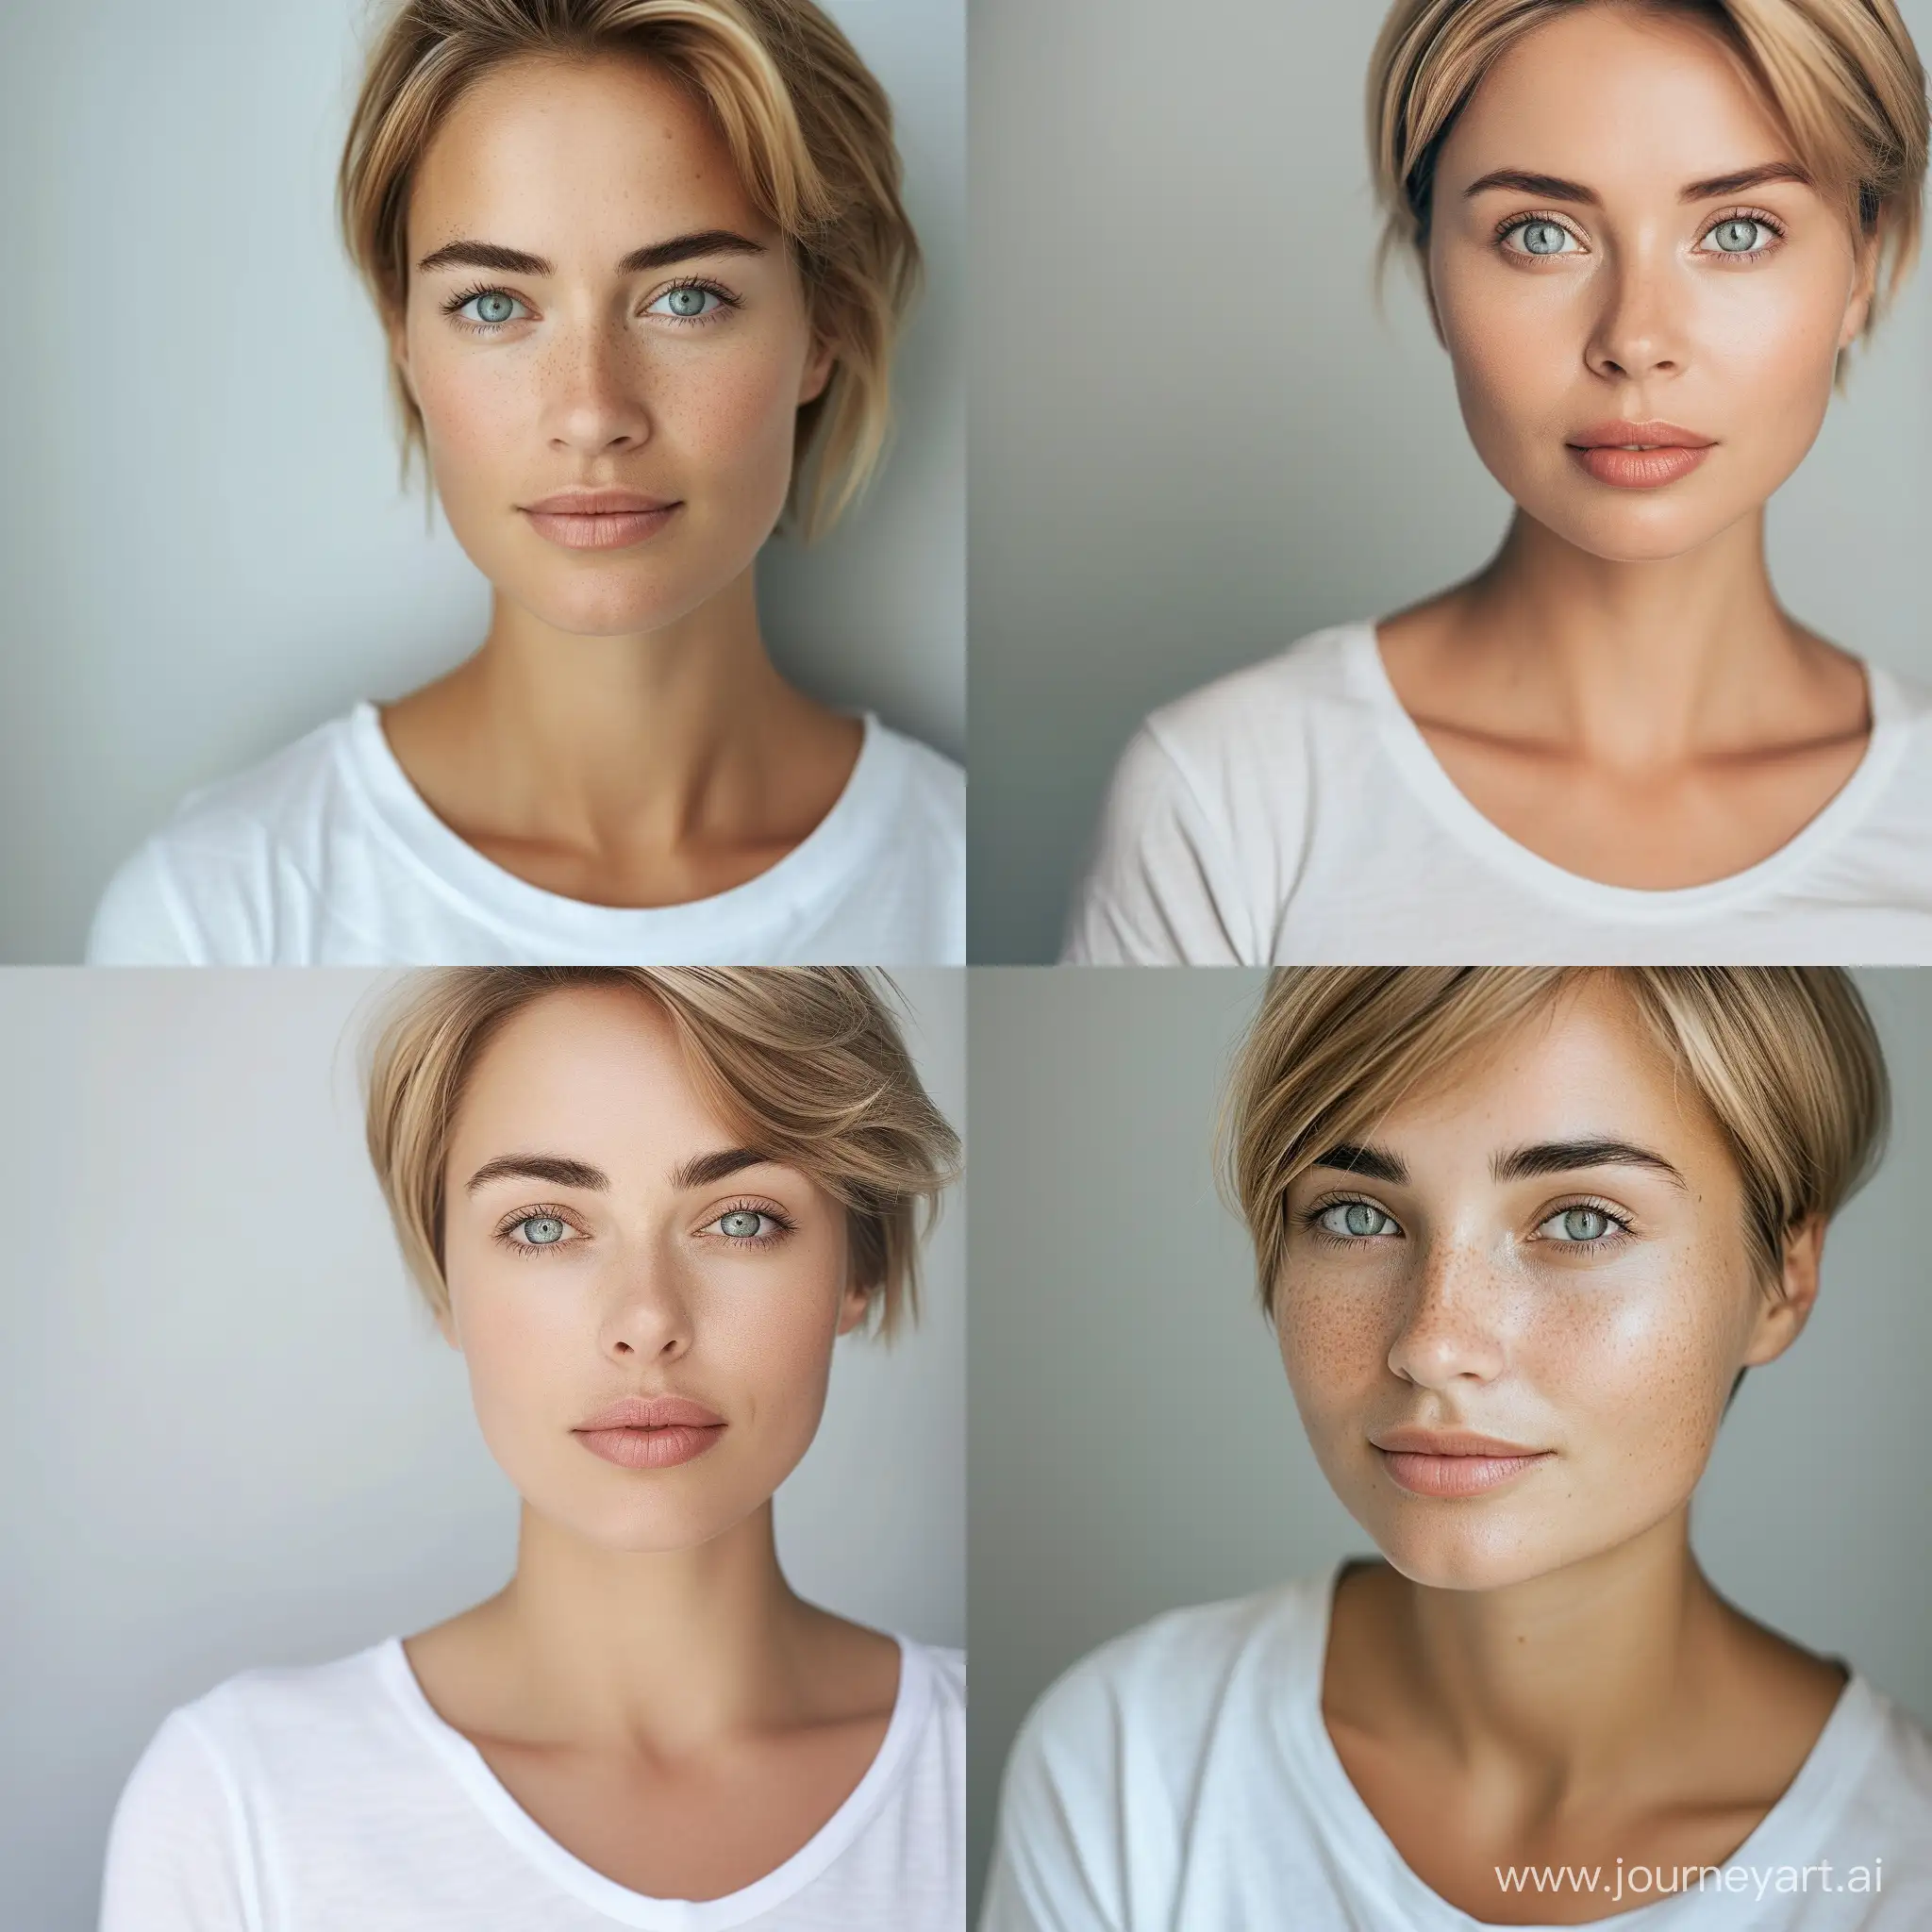 Natural-Beauty-CloseUp-Portrait-of-a-SymmetricalFaced-Woman-with-Short-Blonde-Hair